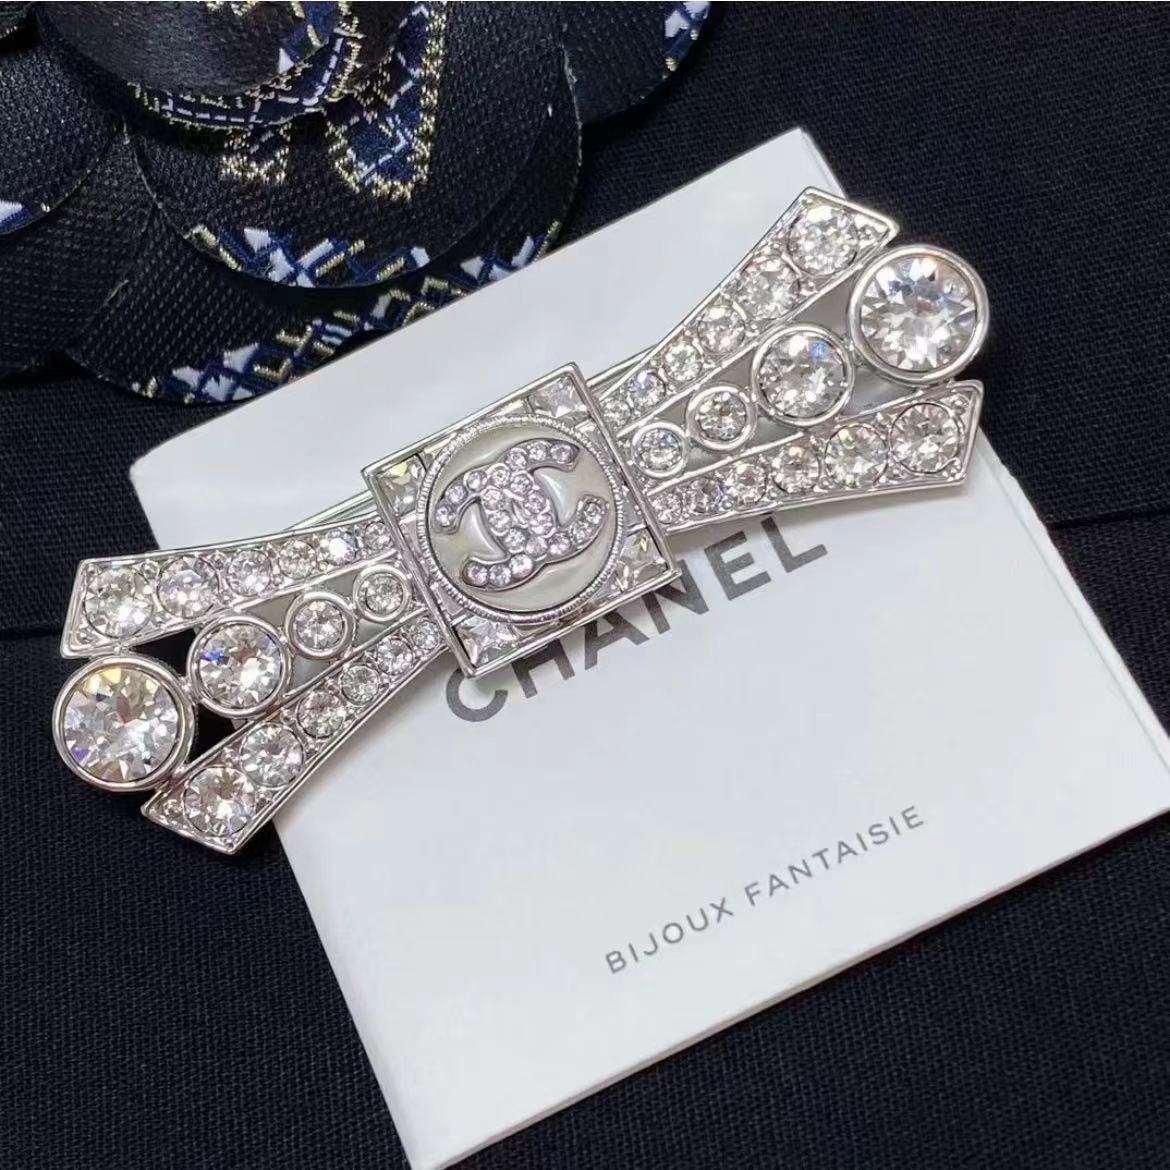 C128 Chanel brooch